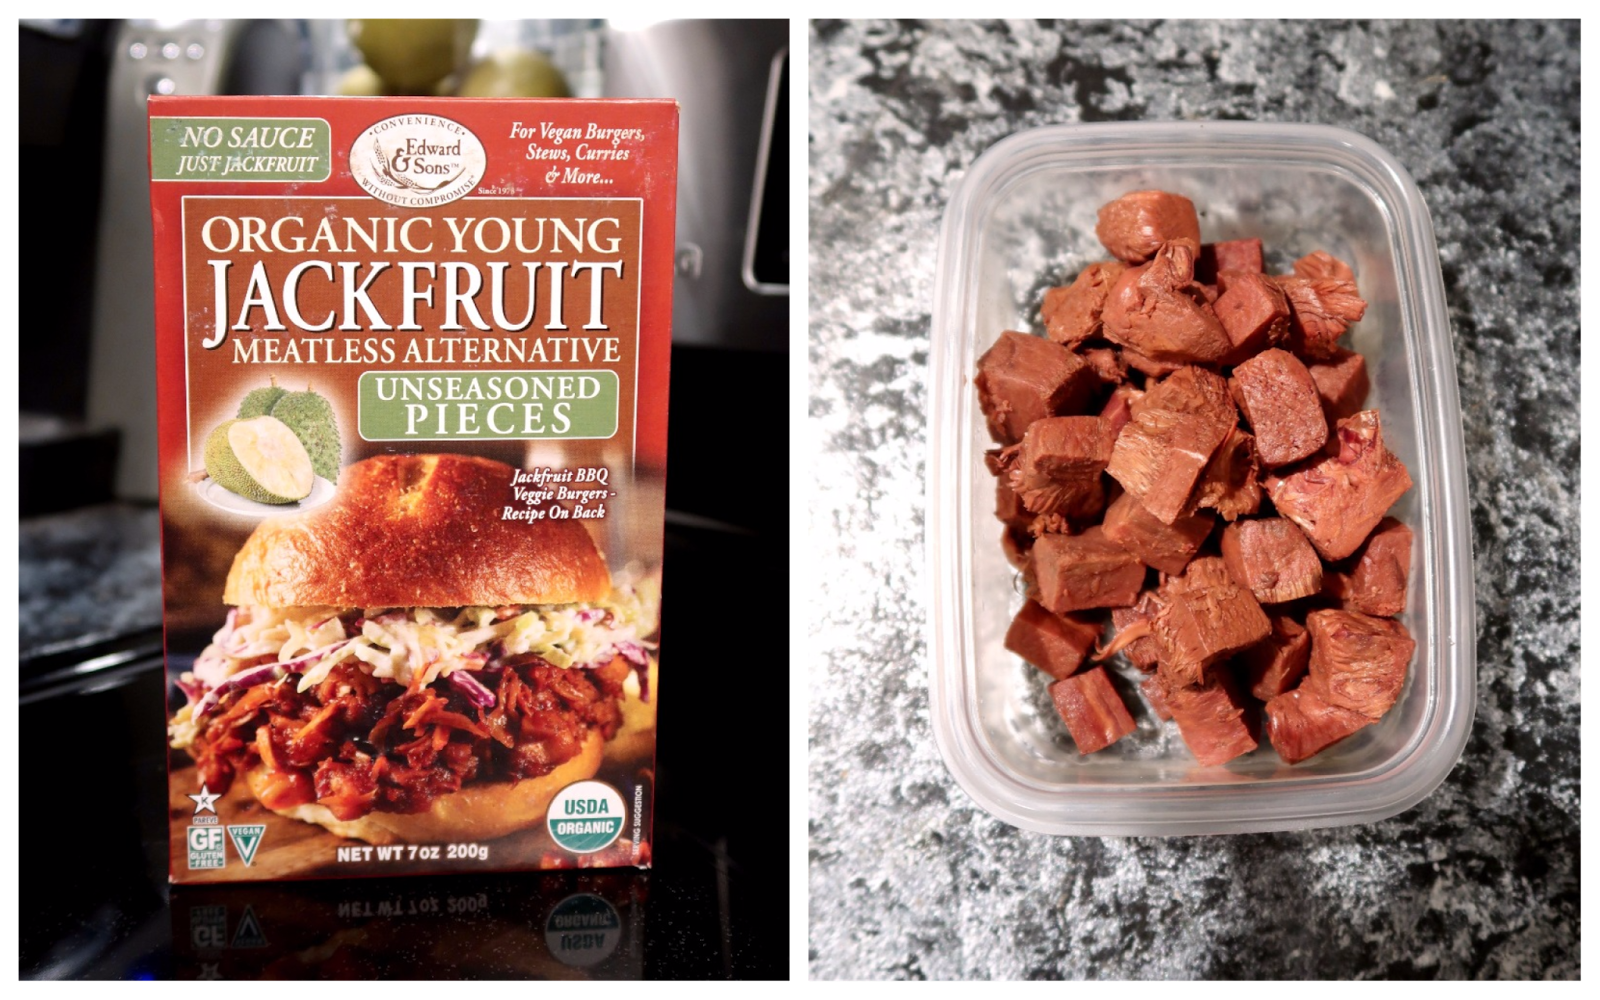 Young jackfruit, how to make vegan pork barbecue